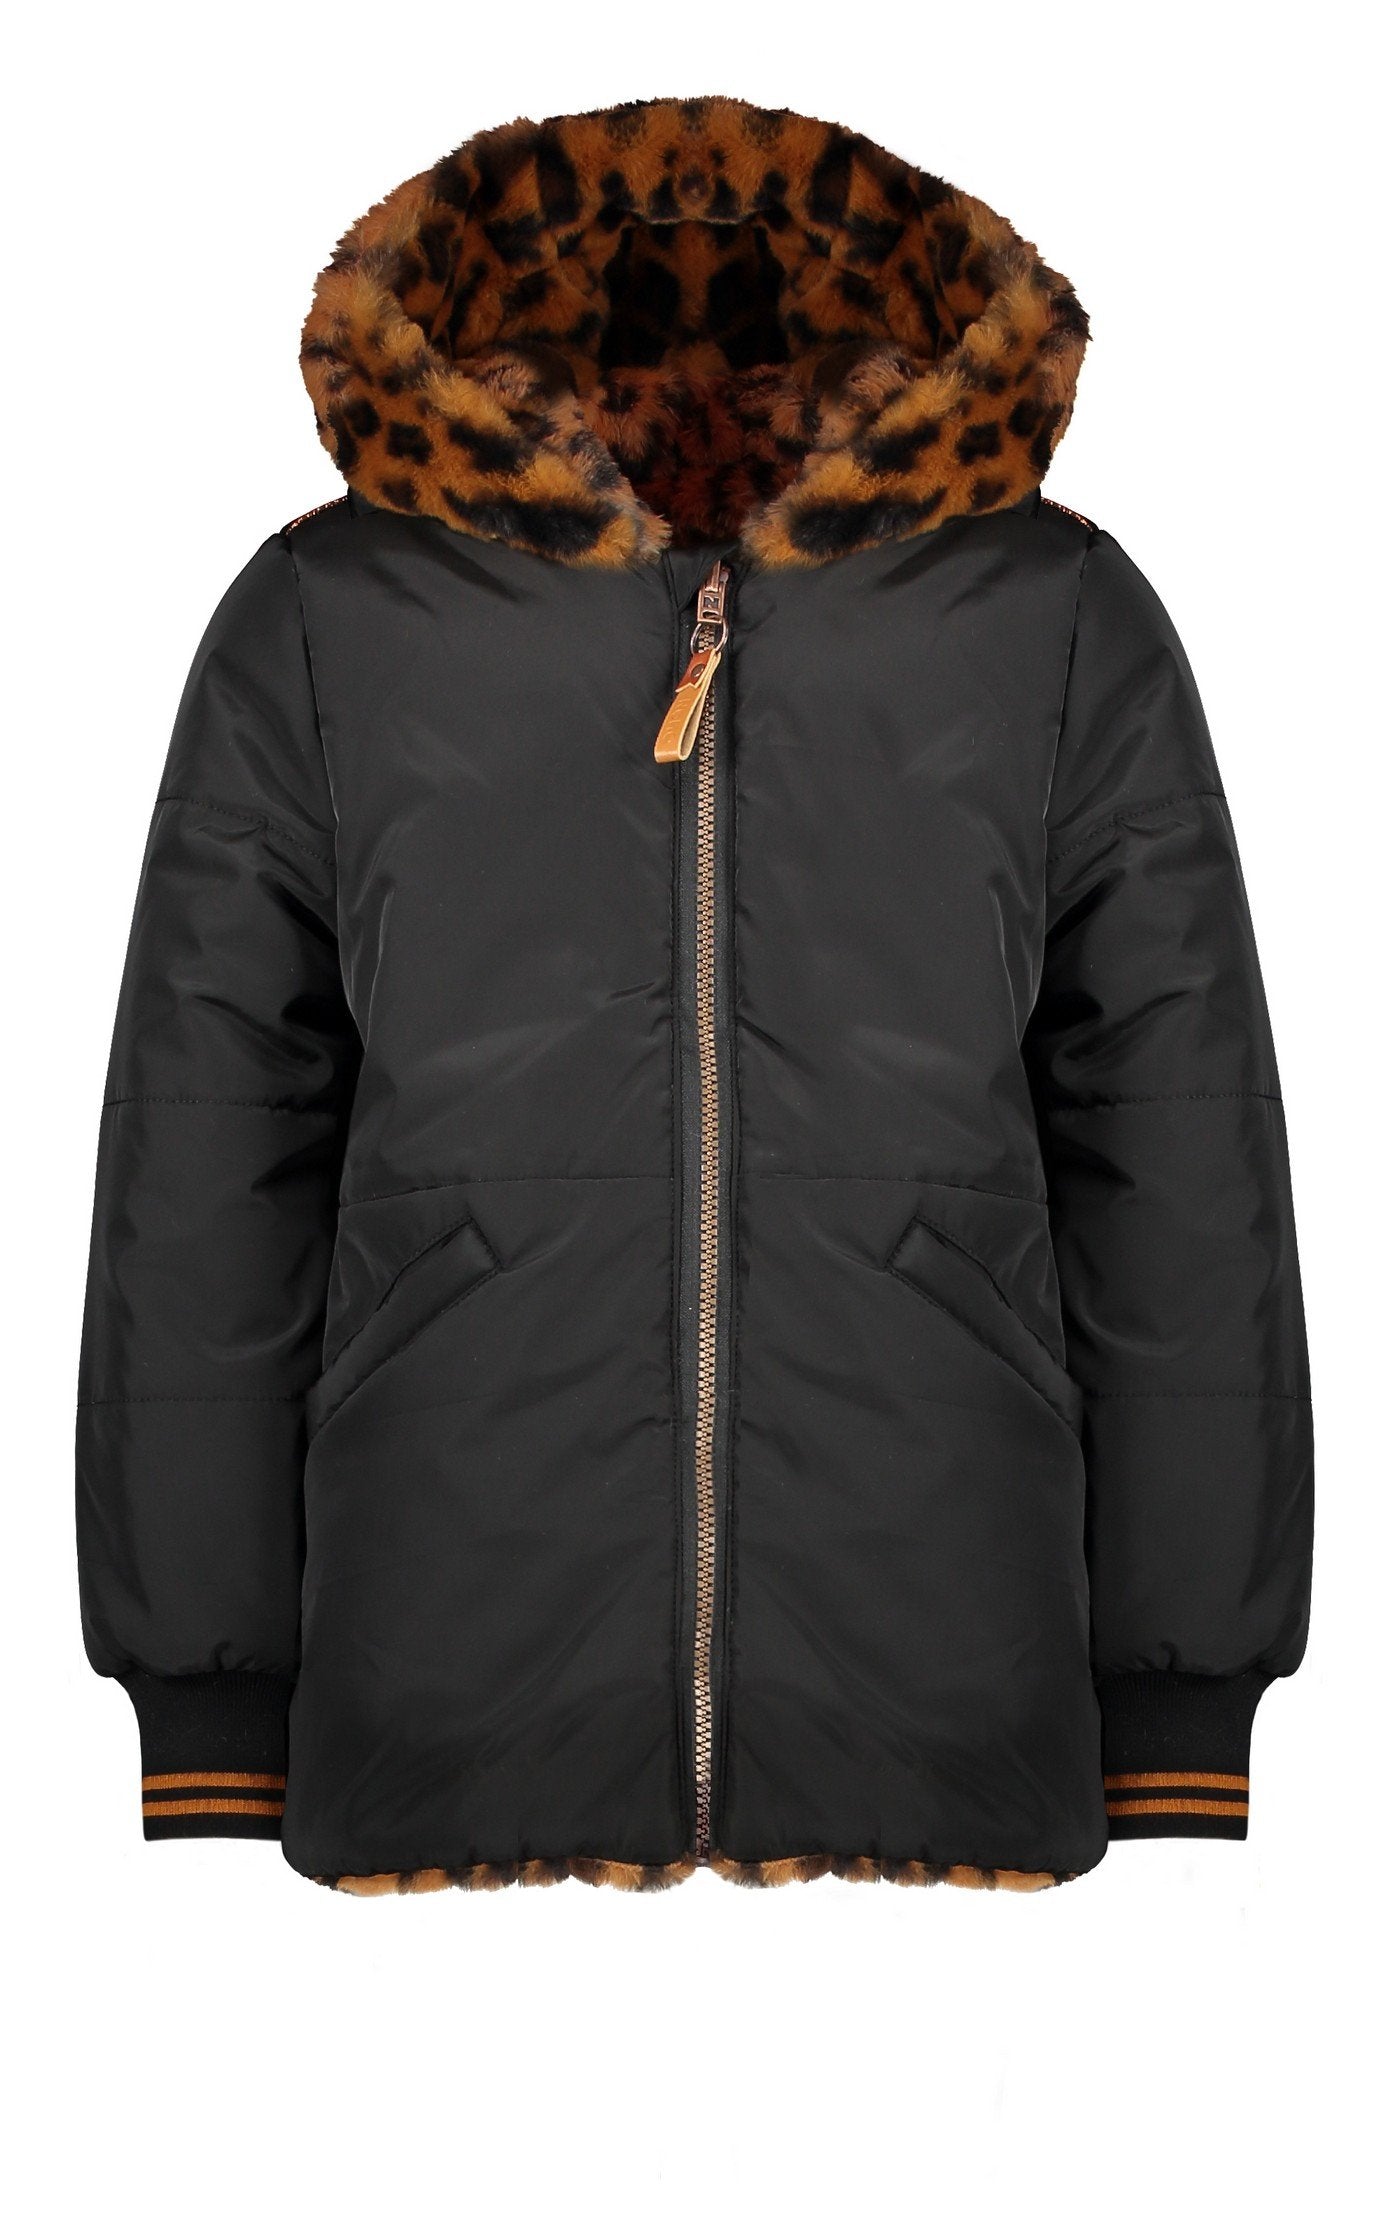 Meisjes Bay mid long reversible hooded A-line jacket van NoNo in de kleur Kurkuma in maat 146-152.